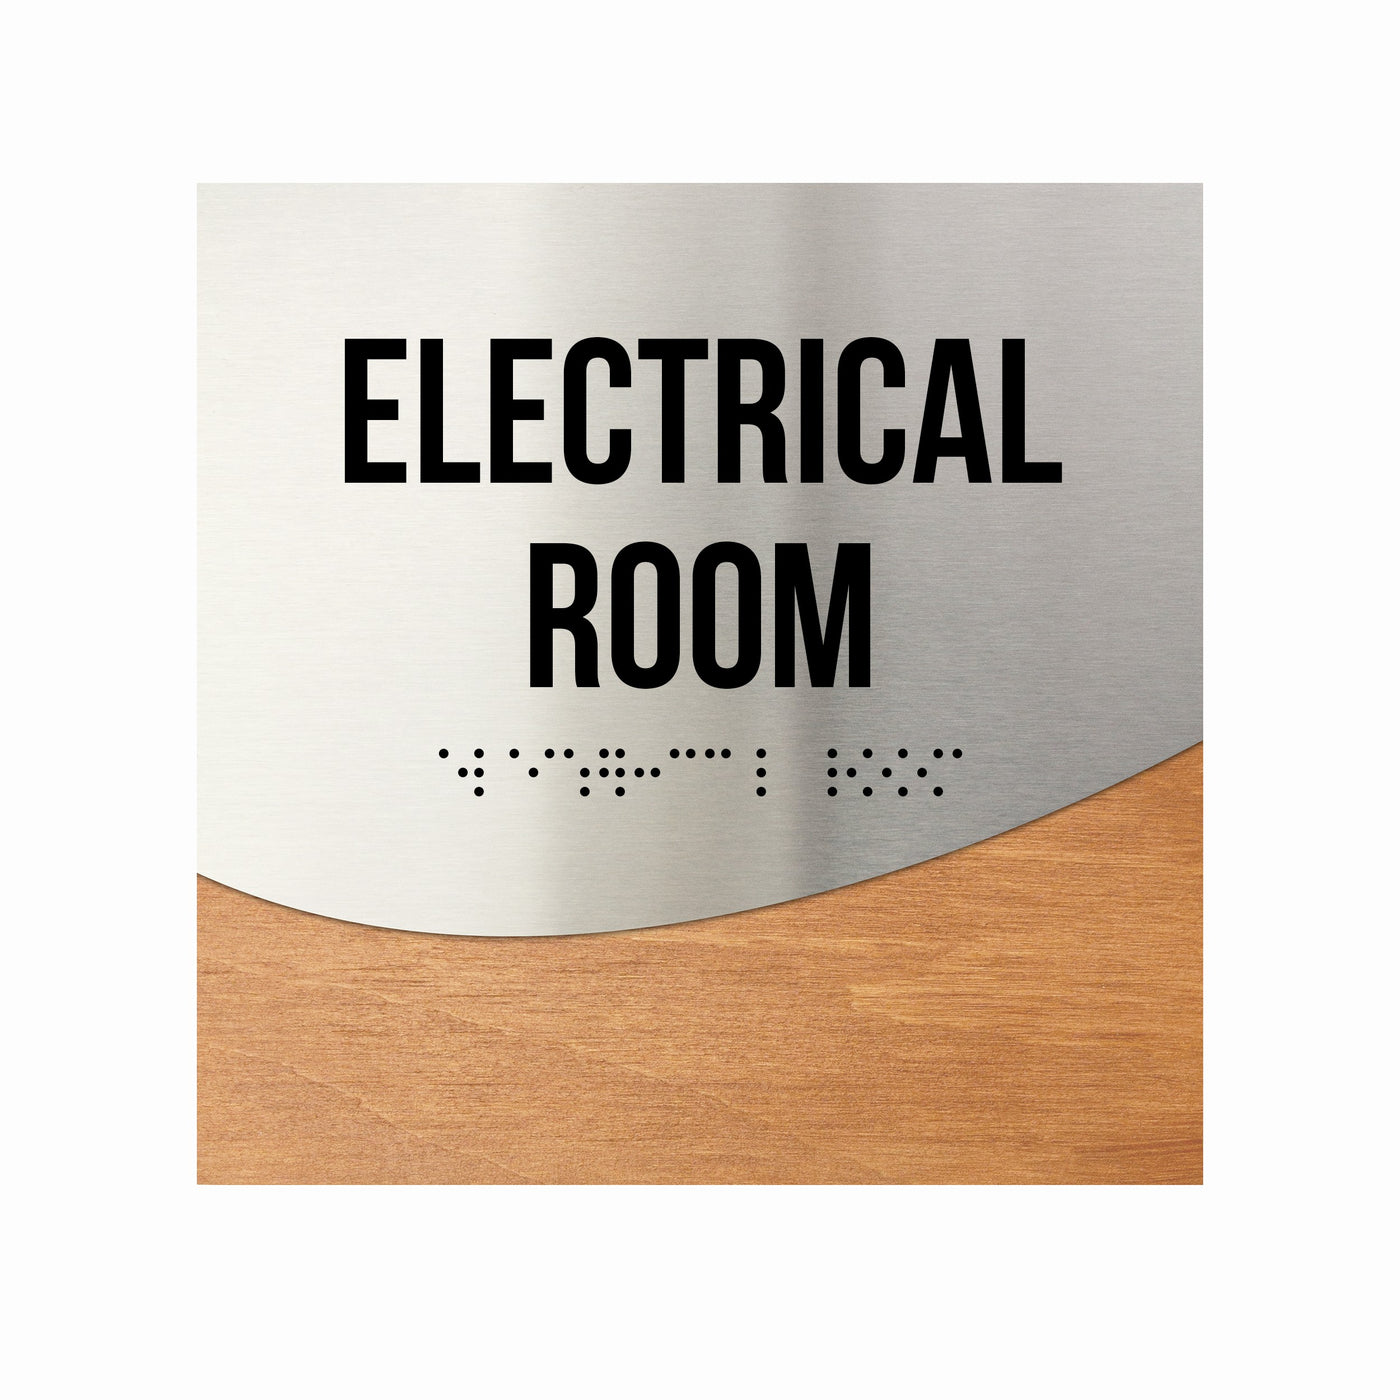 Door Signs - Electrical Room Office Door Signs - Stainless Steel & Wood "Jure" Design